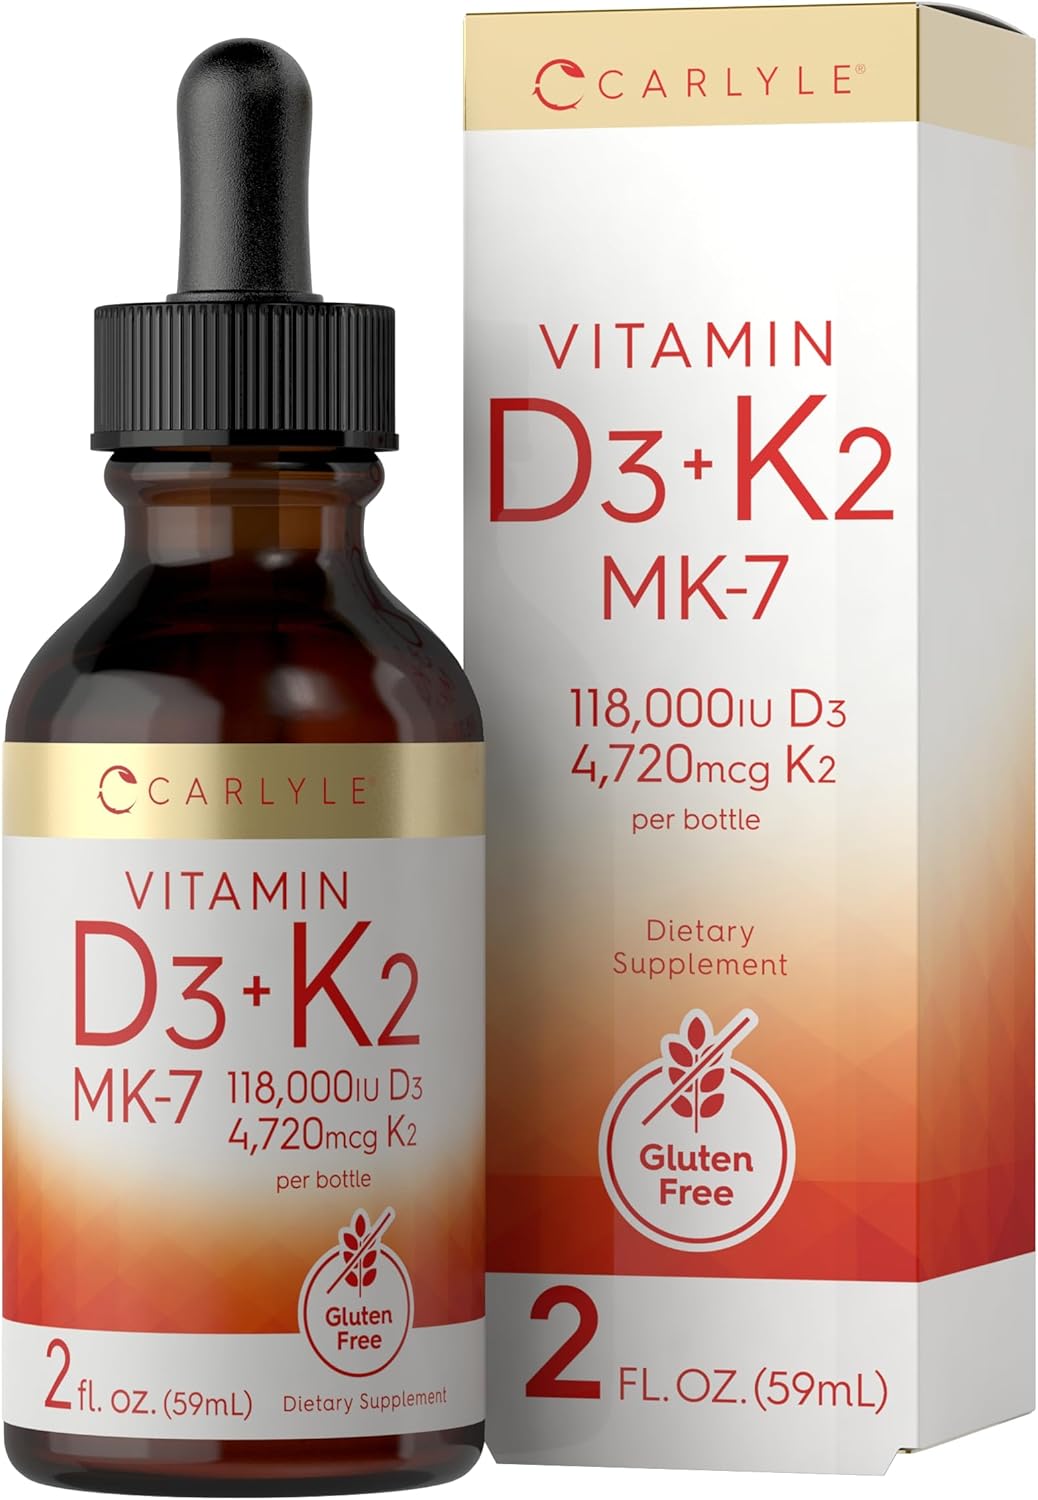 Carlyle Liquid Vitamin D3 with K2 Drops | 2 Fl Oz | MK-7 Supplement | Vegetarian, Non-GMO, Gluten Free